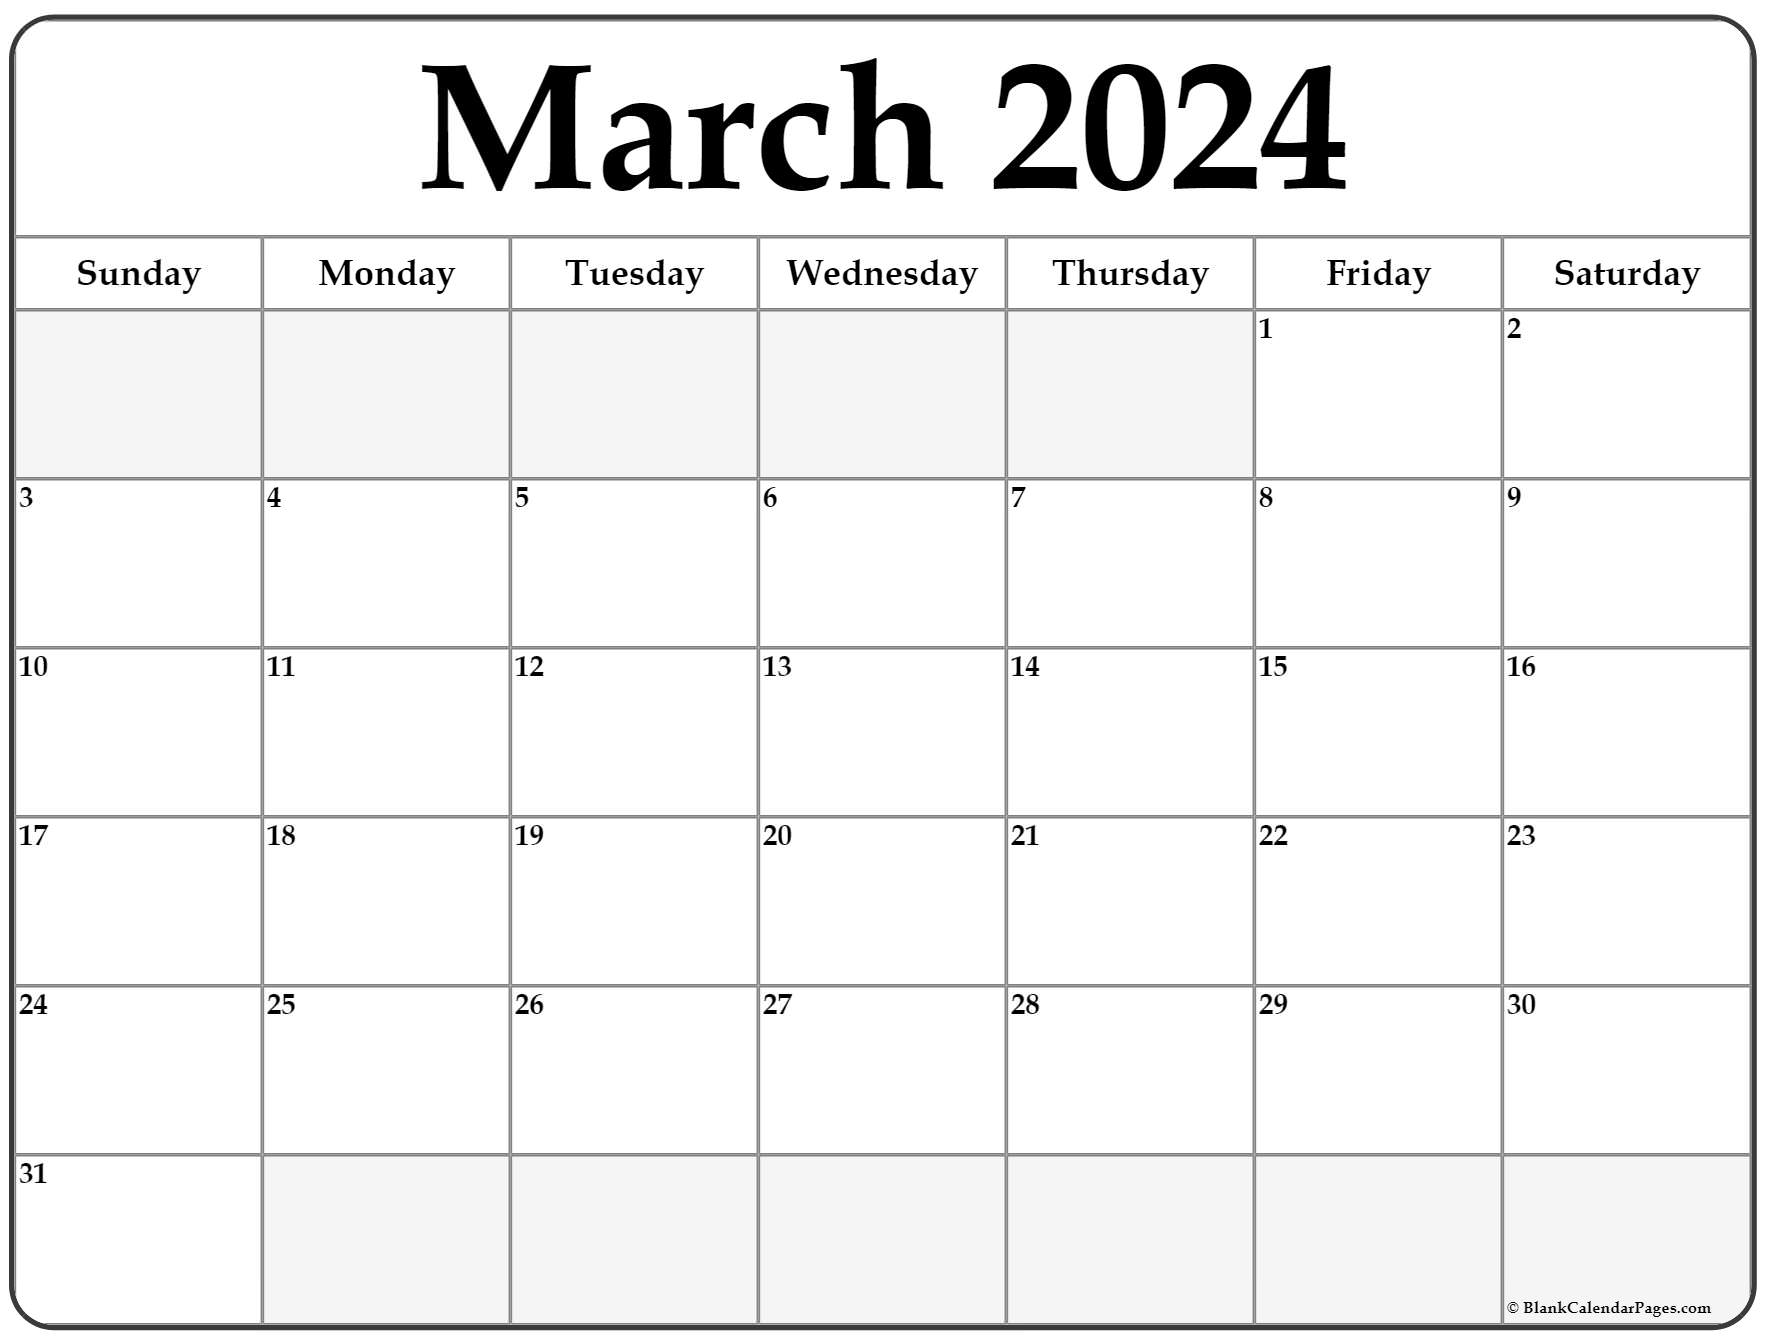 March 2022 Calendar Template March 2022 Calendar | Free Printable Calendar Templates